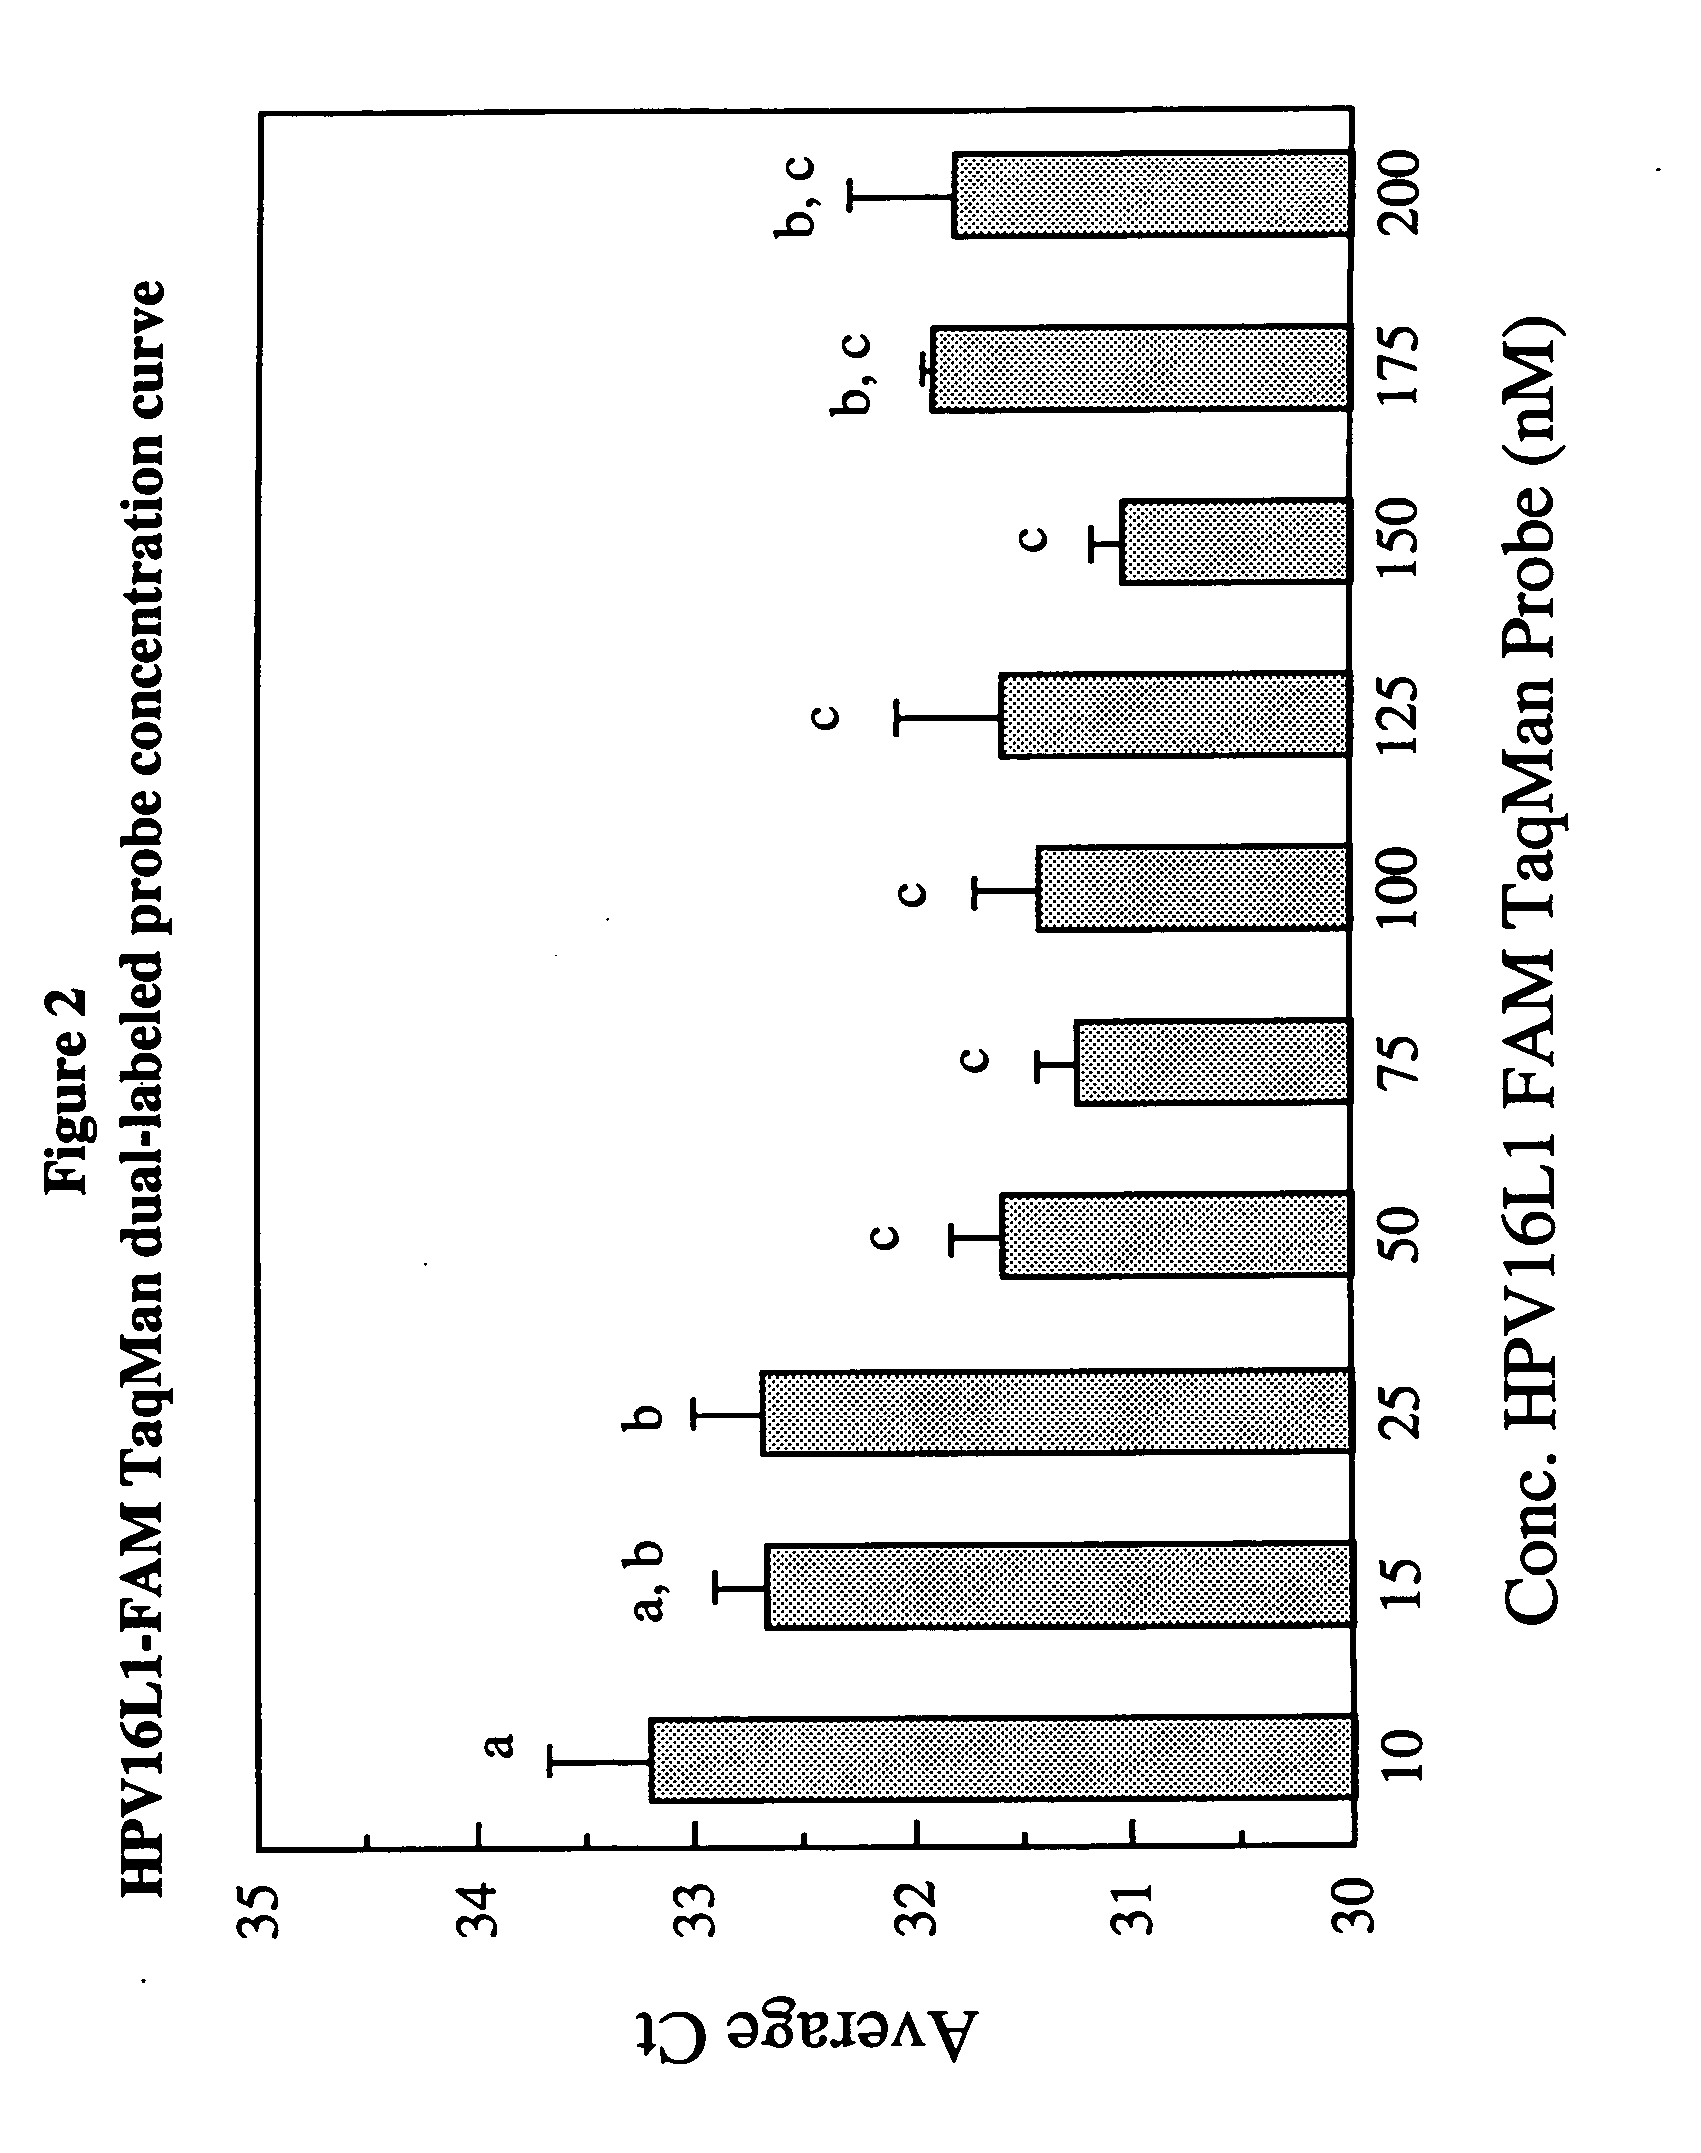 Fluorescent multiplex hpv pcr assays using multiple fluorophores